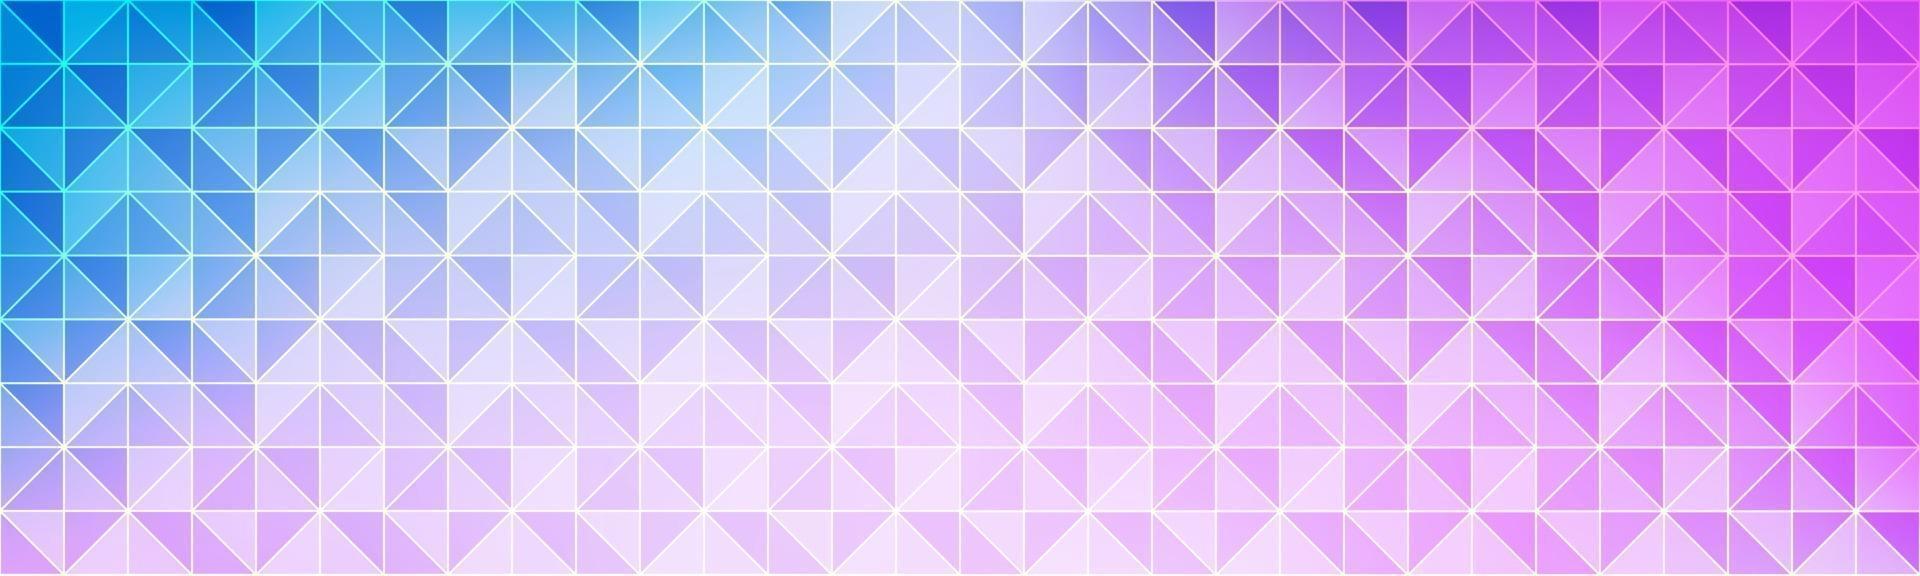 Patrón de mosaico de cuadrícula azul púrpura encabezado de triángulo moderno diseño creativo banner colorido ilustración vectorial vector